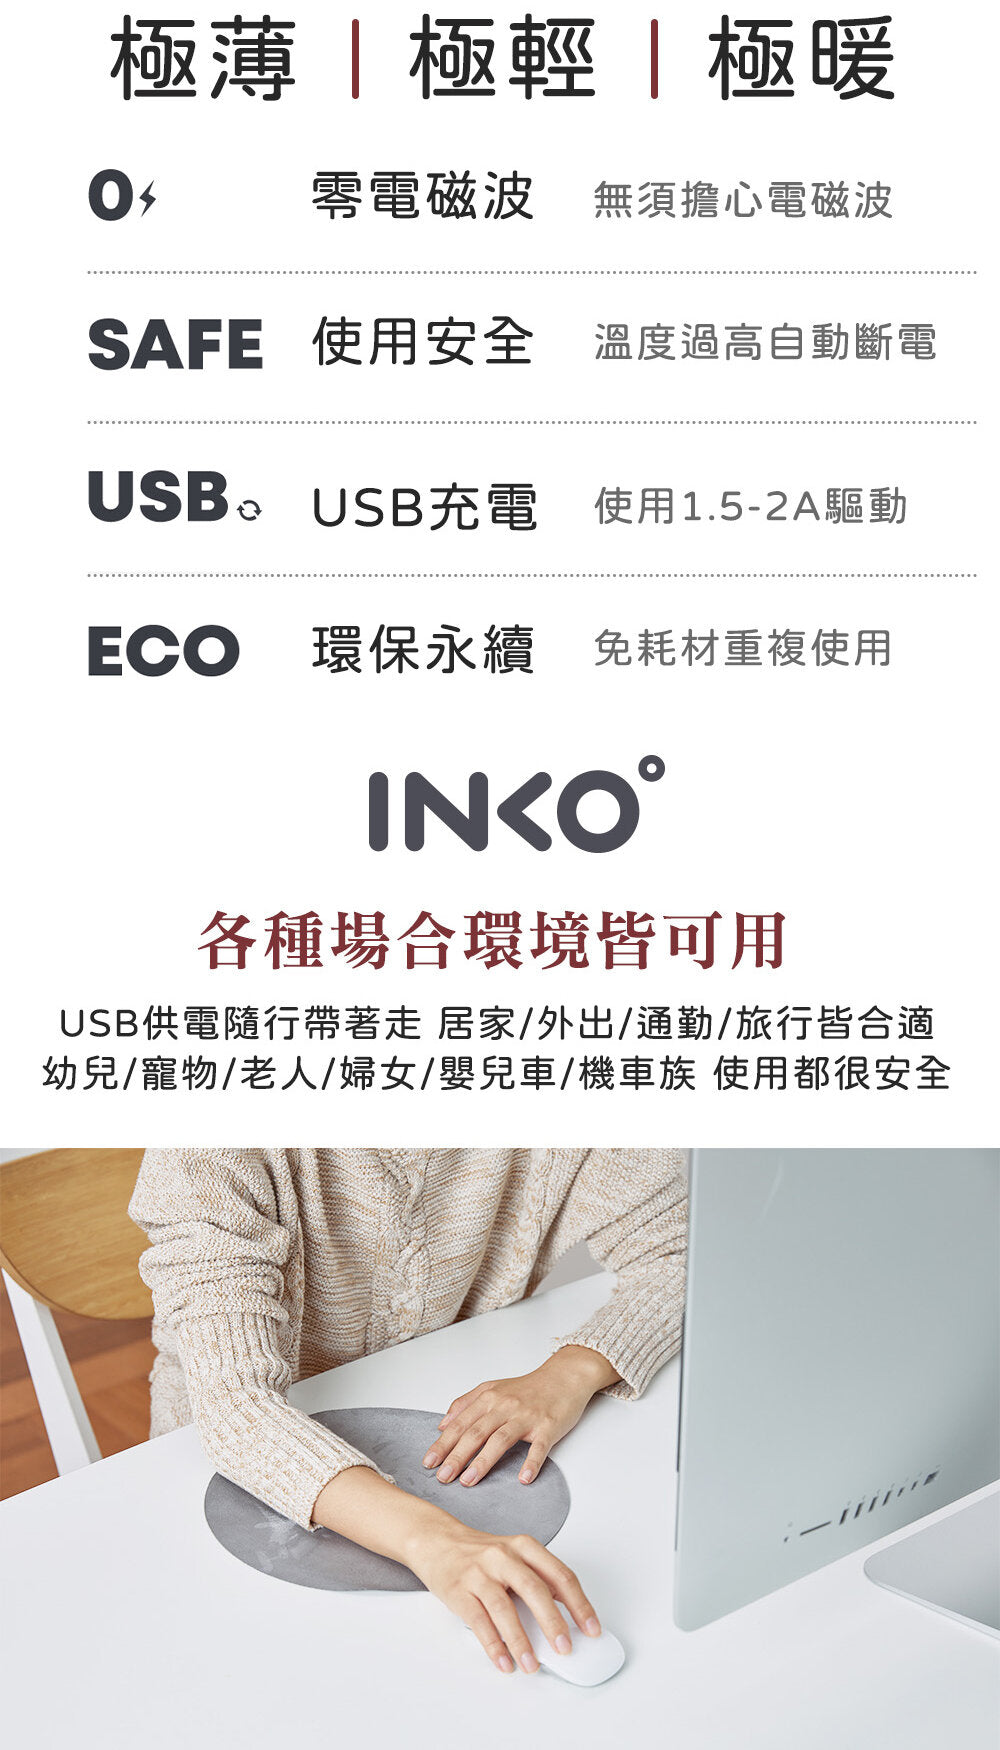 Inko - Smart Heating Mat HEAL Ultra-thin Heating Mat (Smooth TPU) PD-270